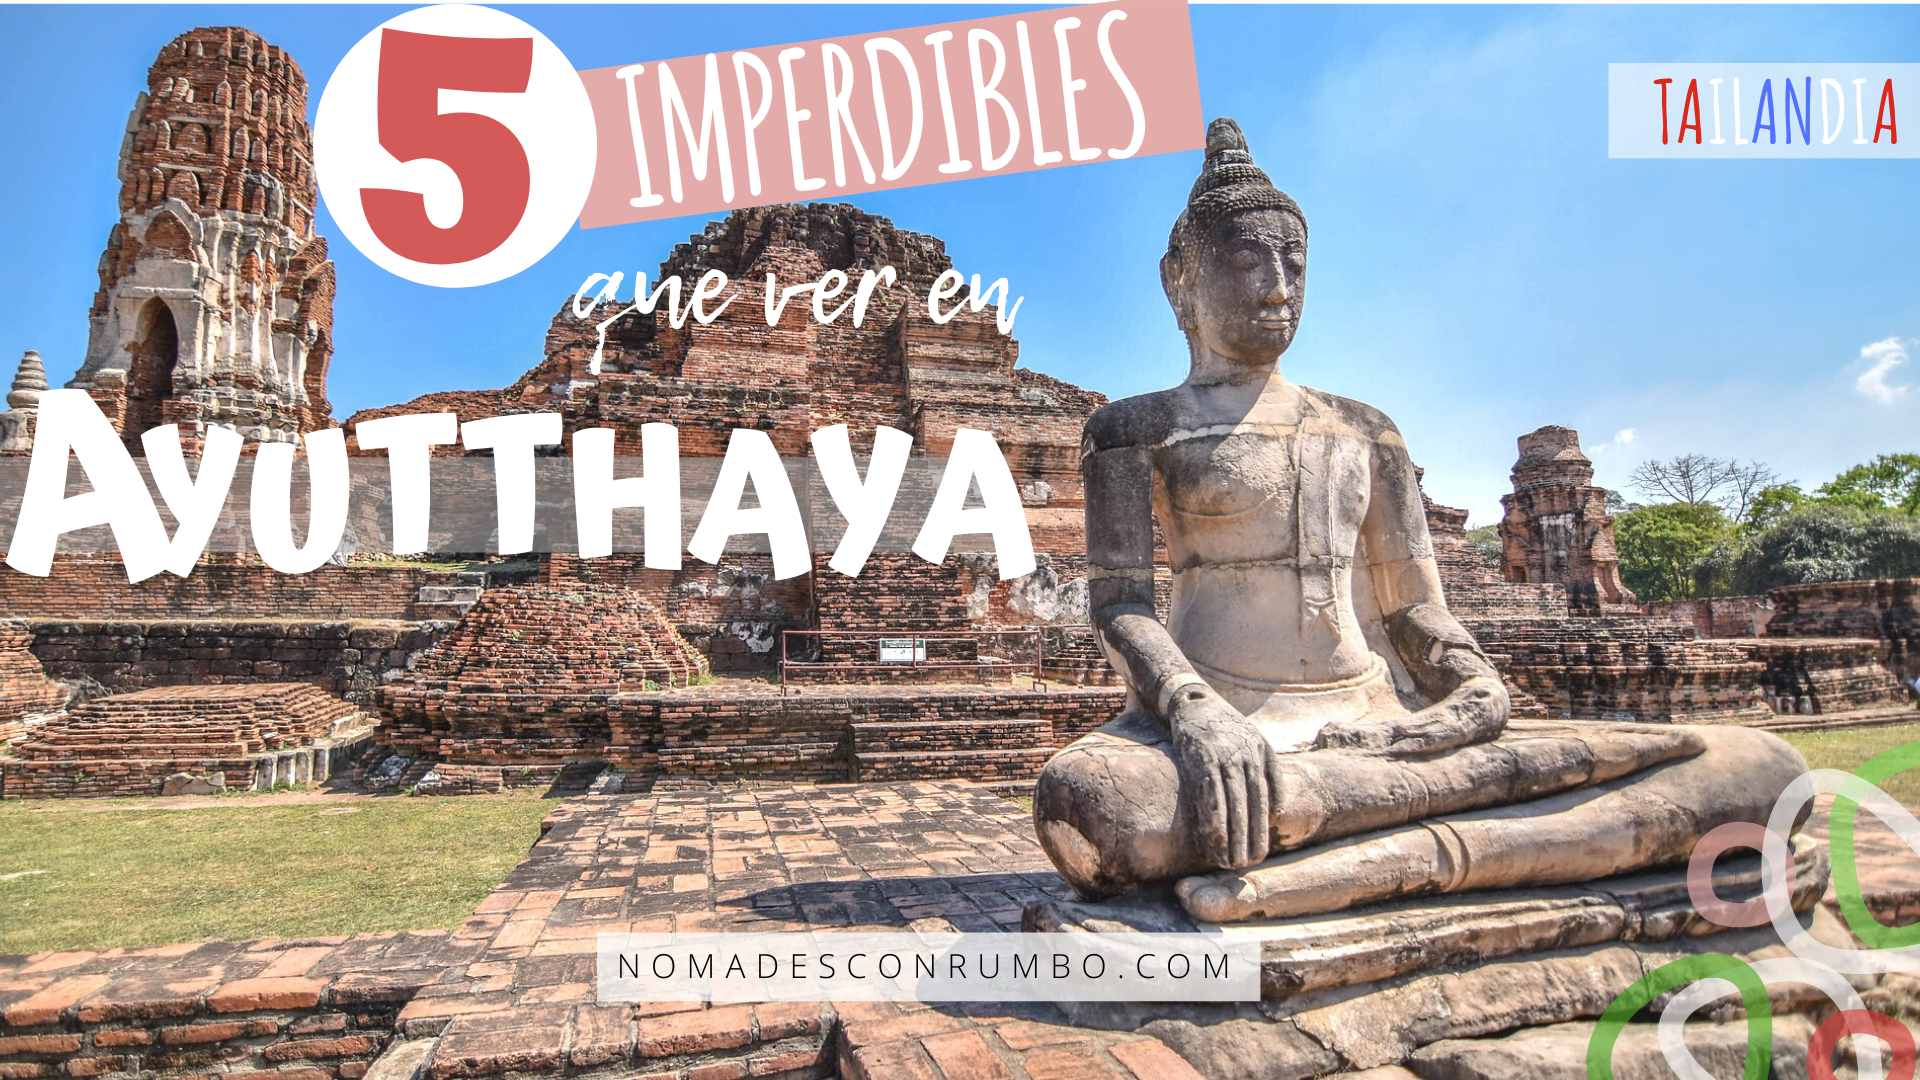 37-c-i) 5 imperdibles que ver en ayutthaya